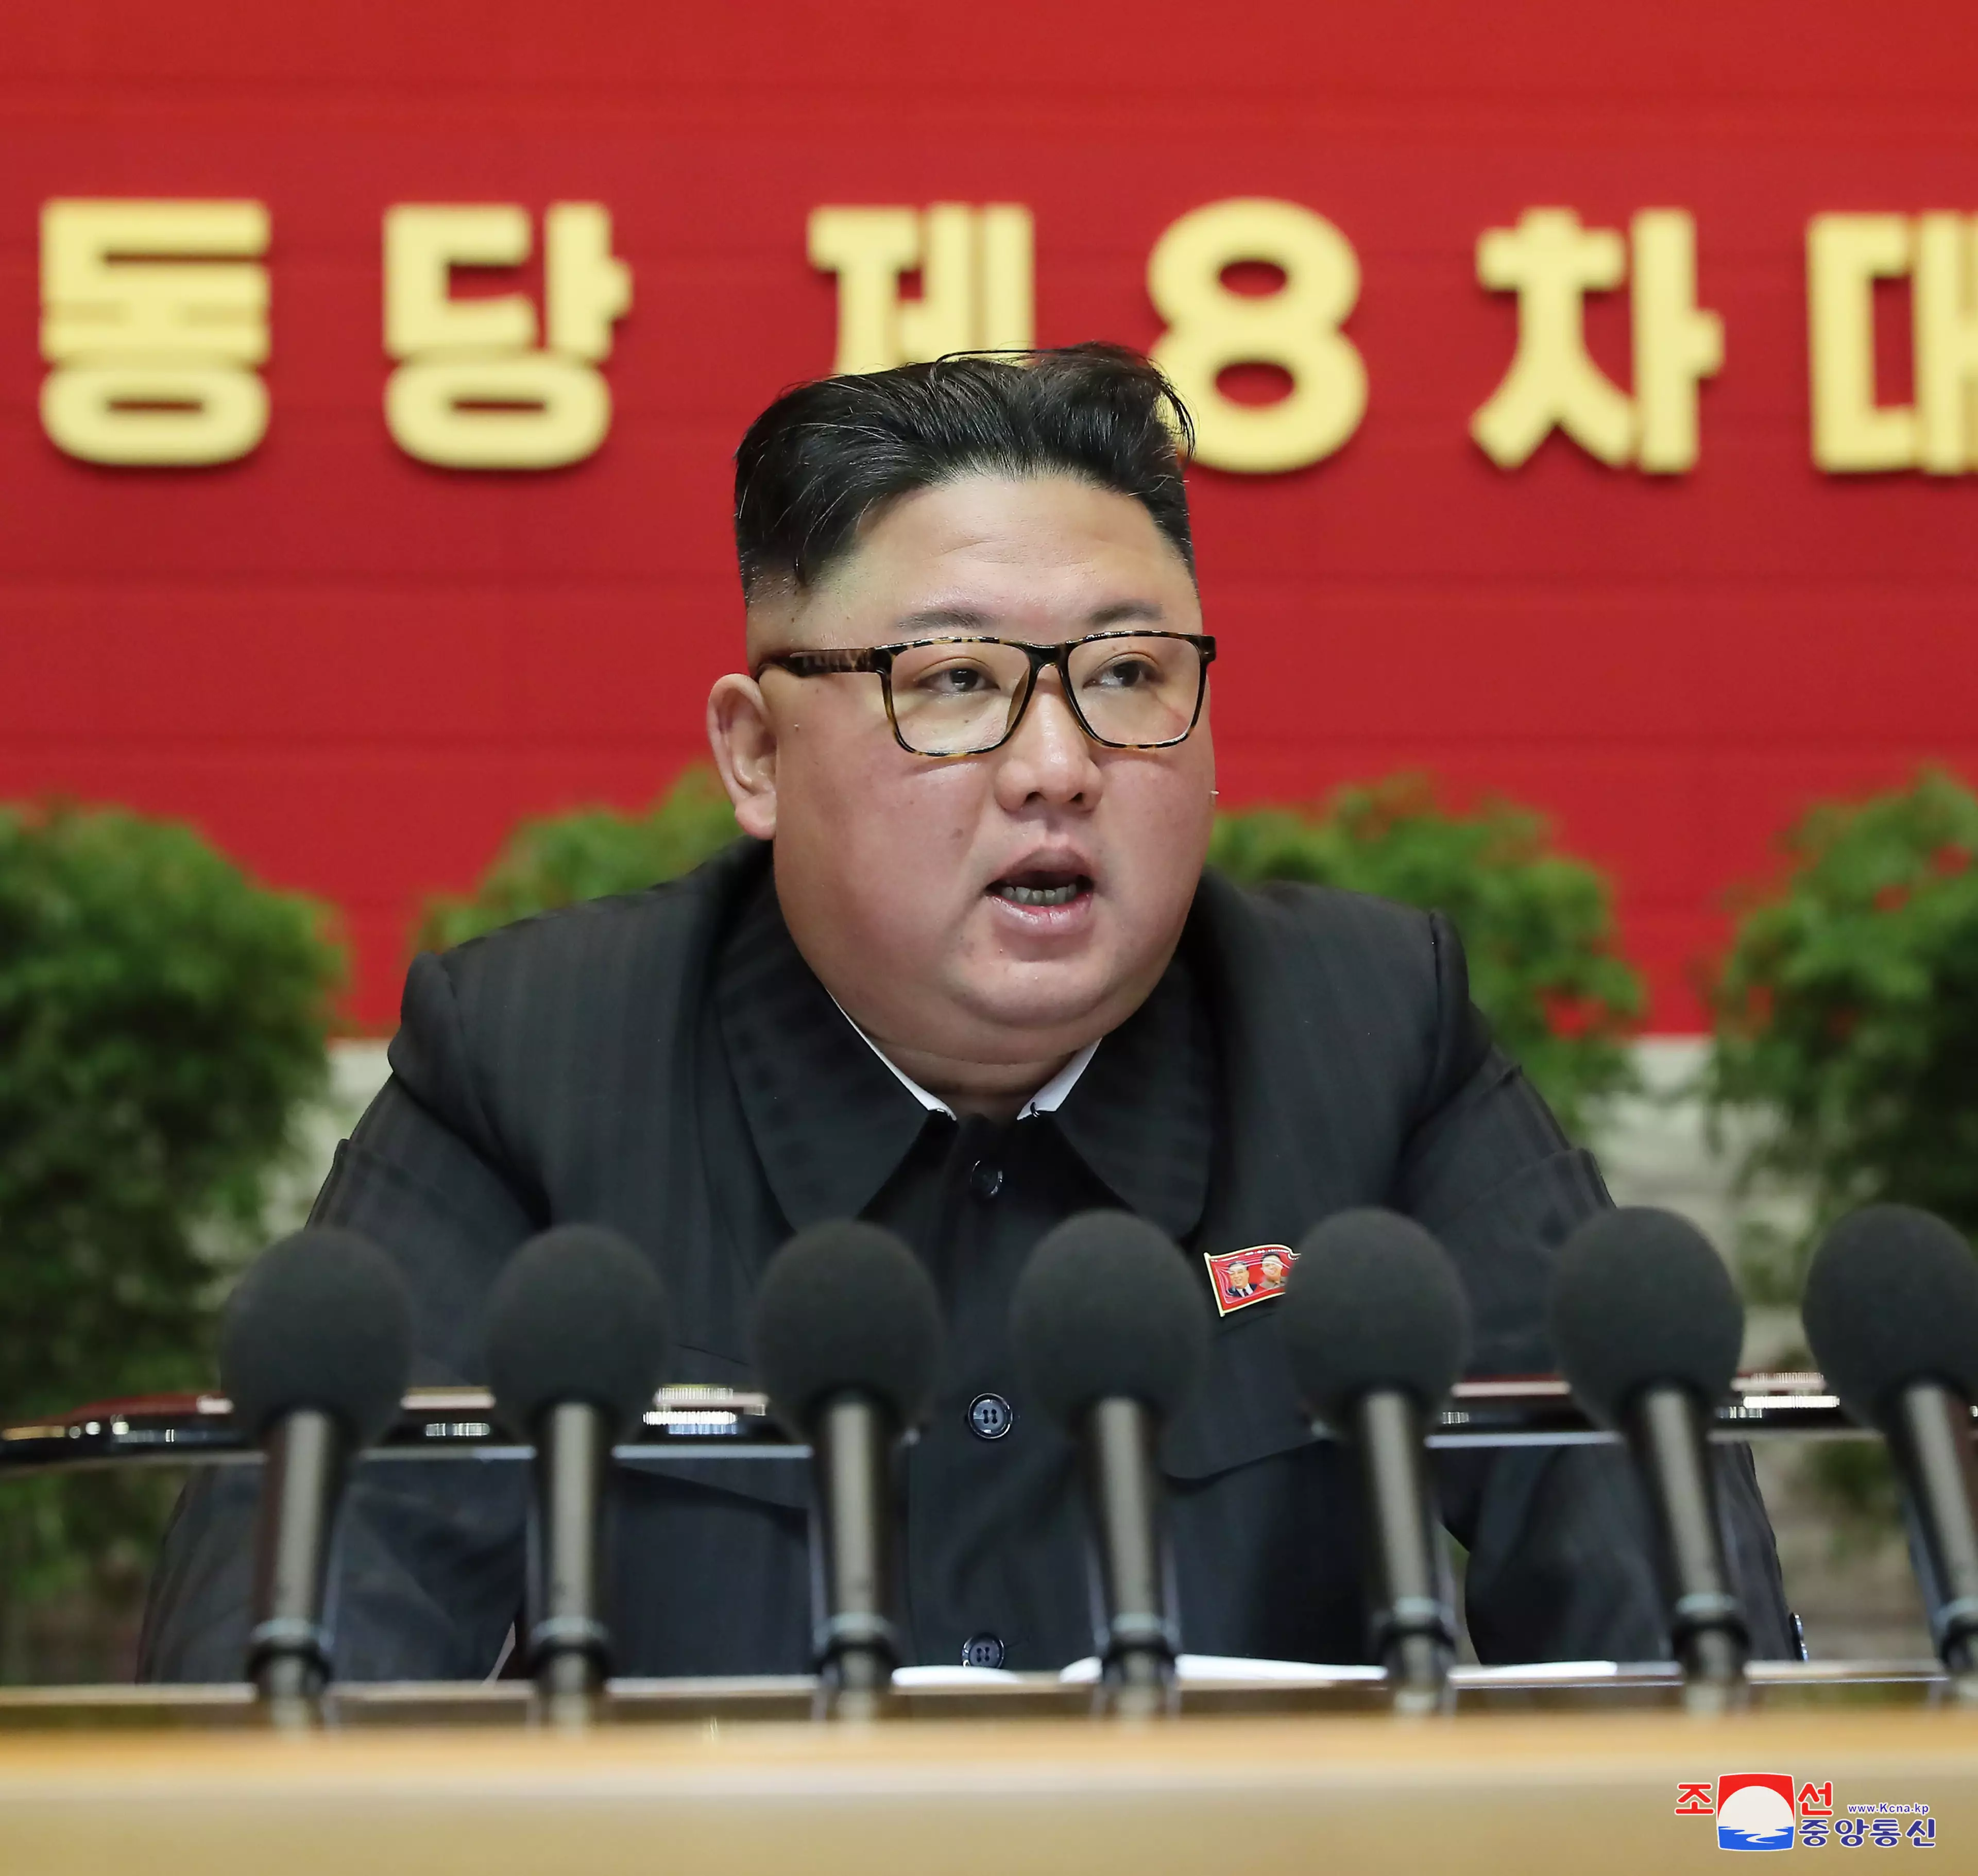 Kim Jong-un in January 2021